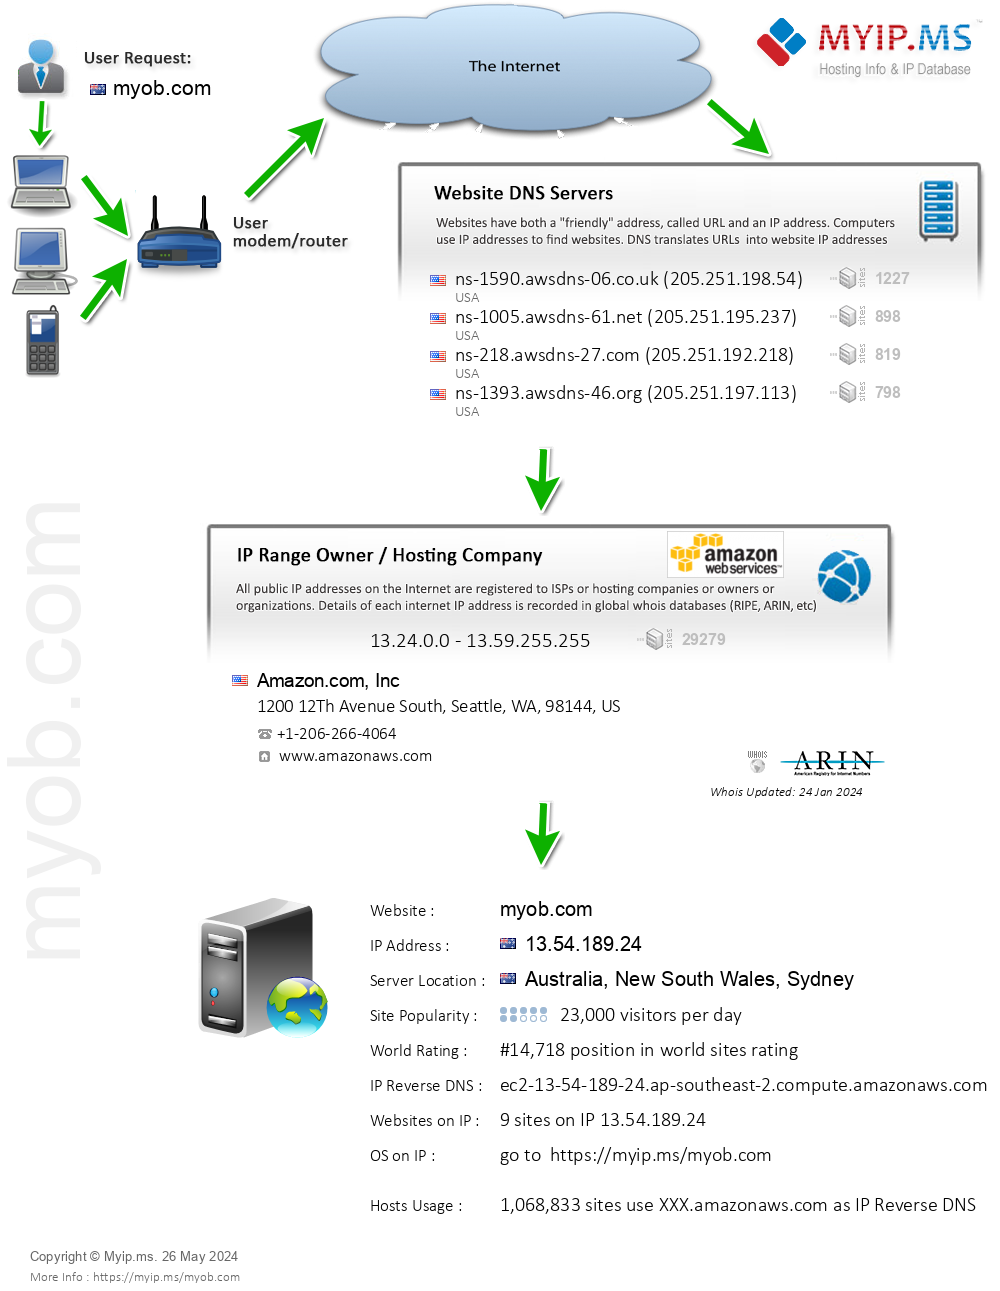 Myob.com - Website Hosting Visual IP Diagram